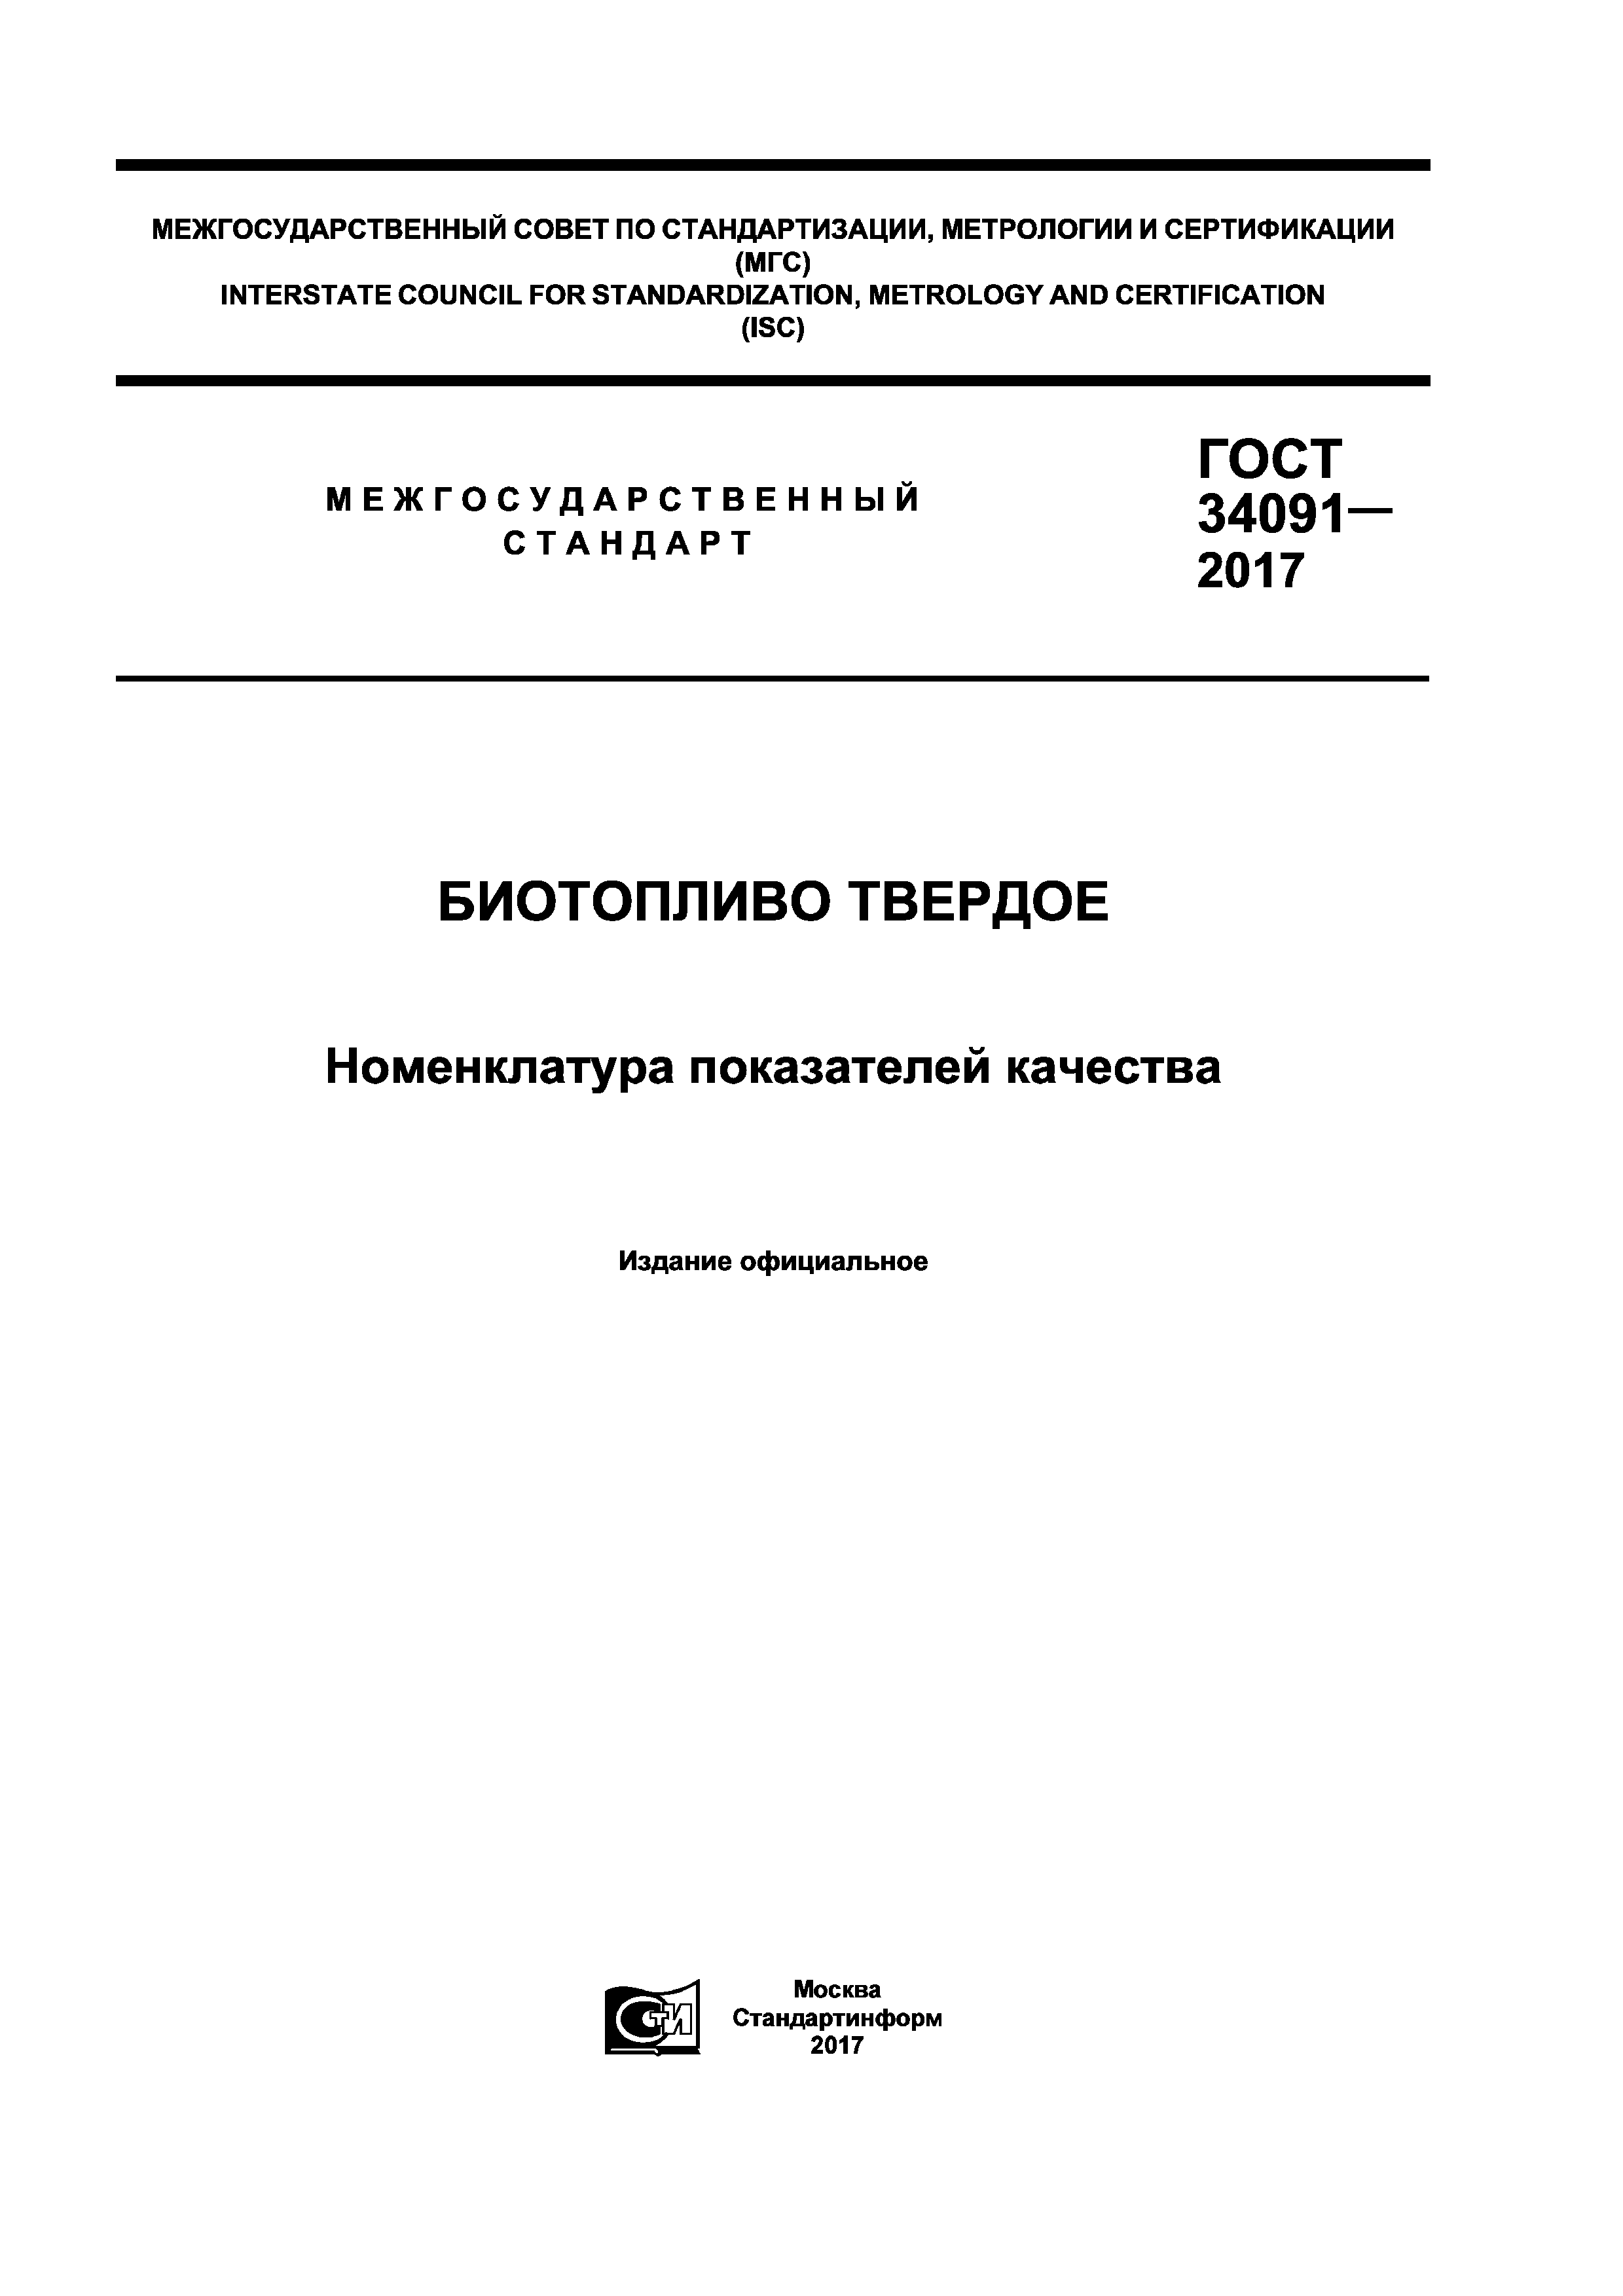 ГОСТ 34091-2017